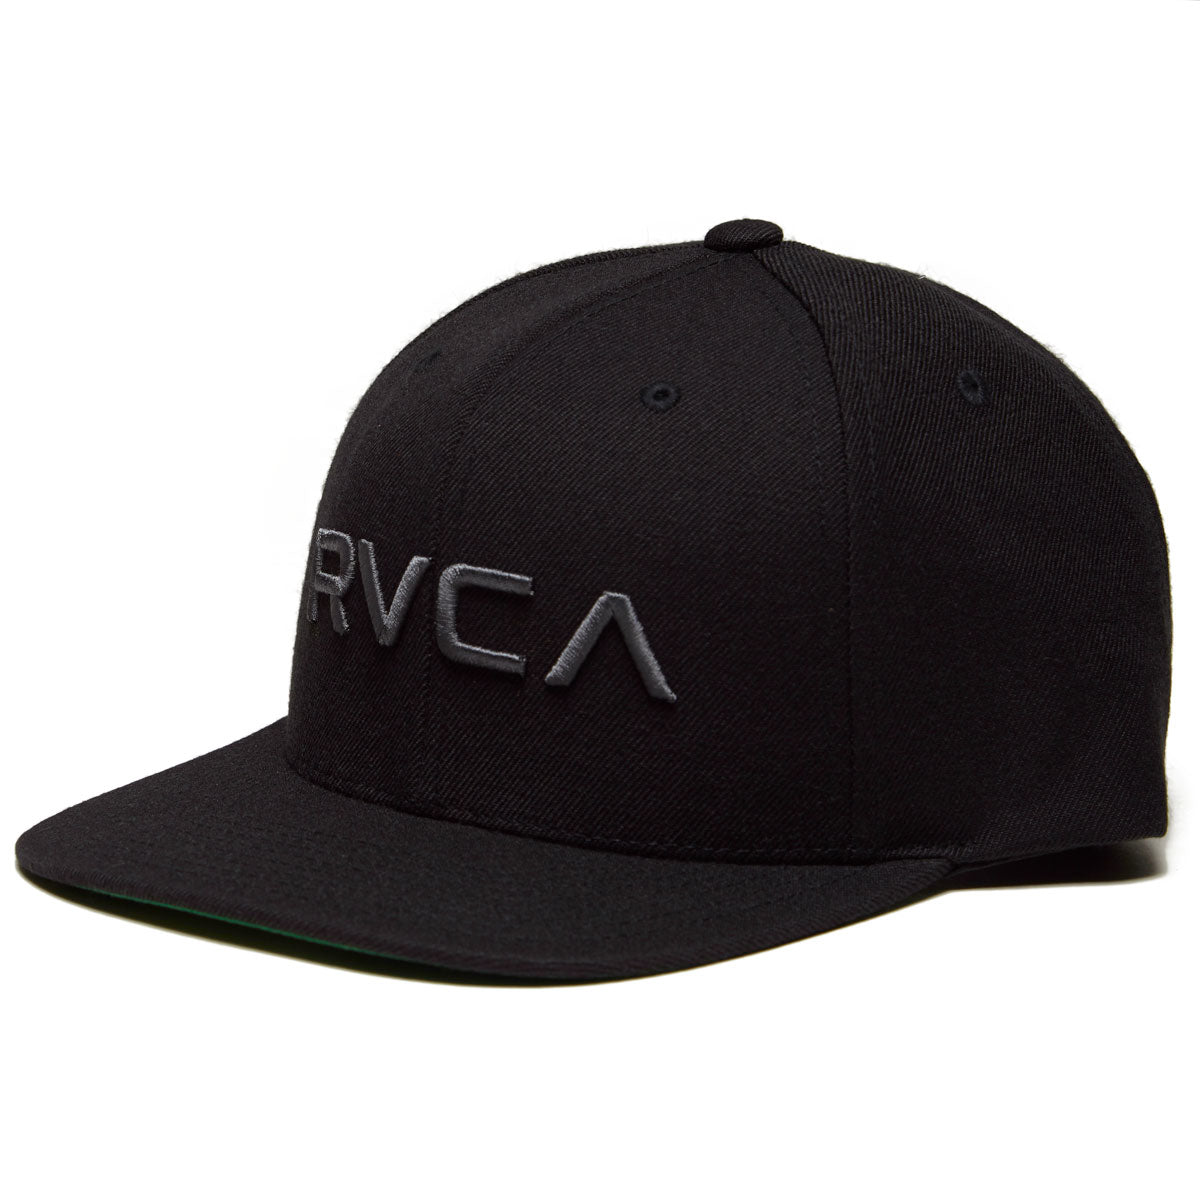 RVCA Twill Snapback II Hat - Black/Charcoal image 1